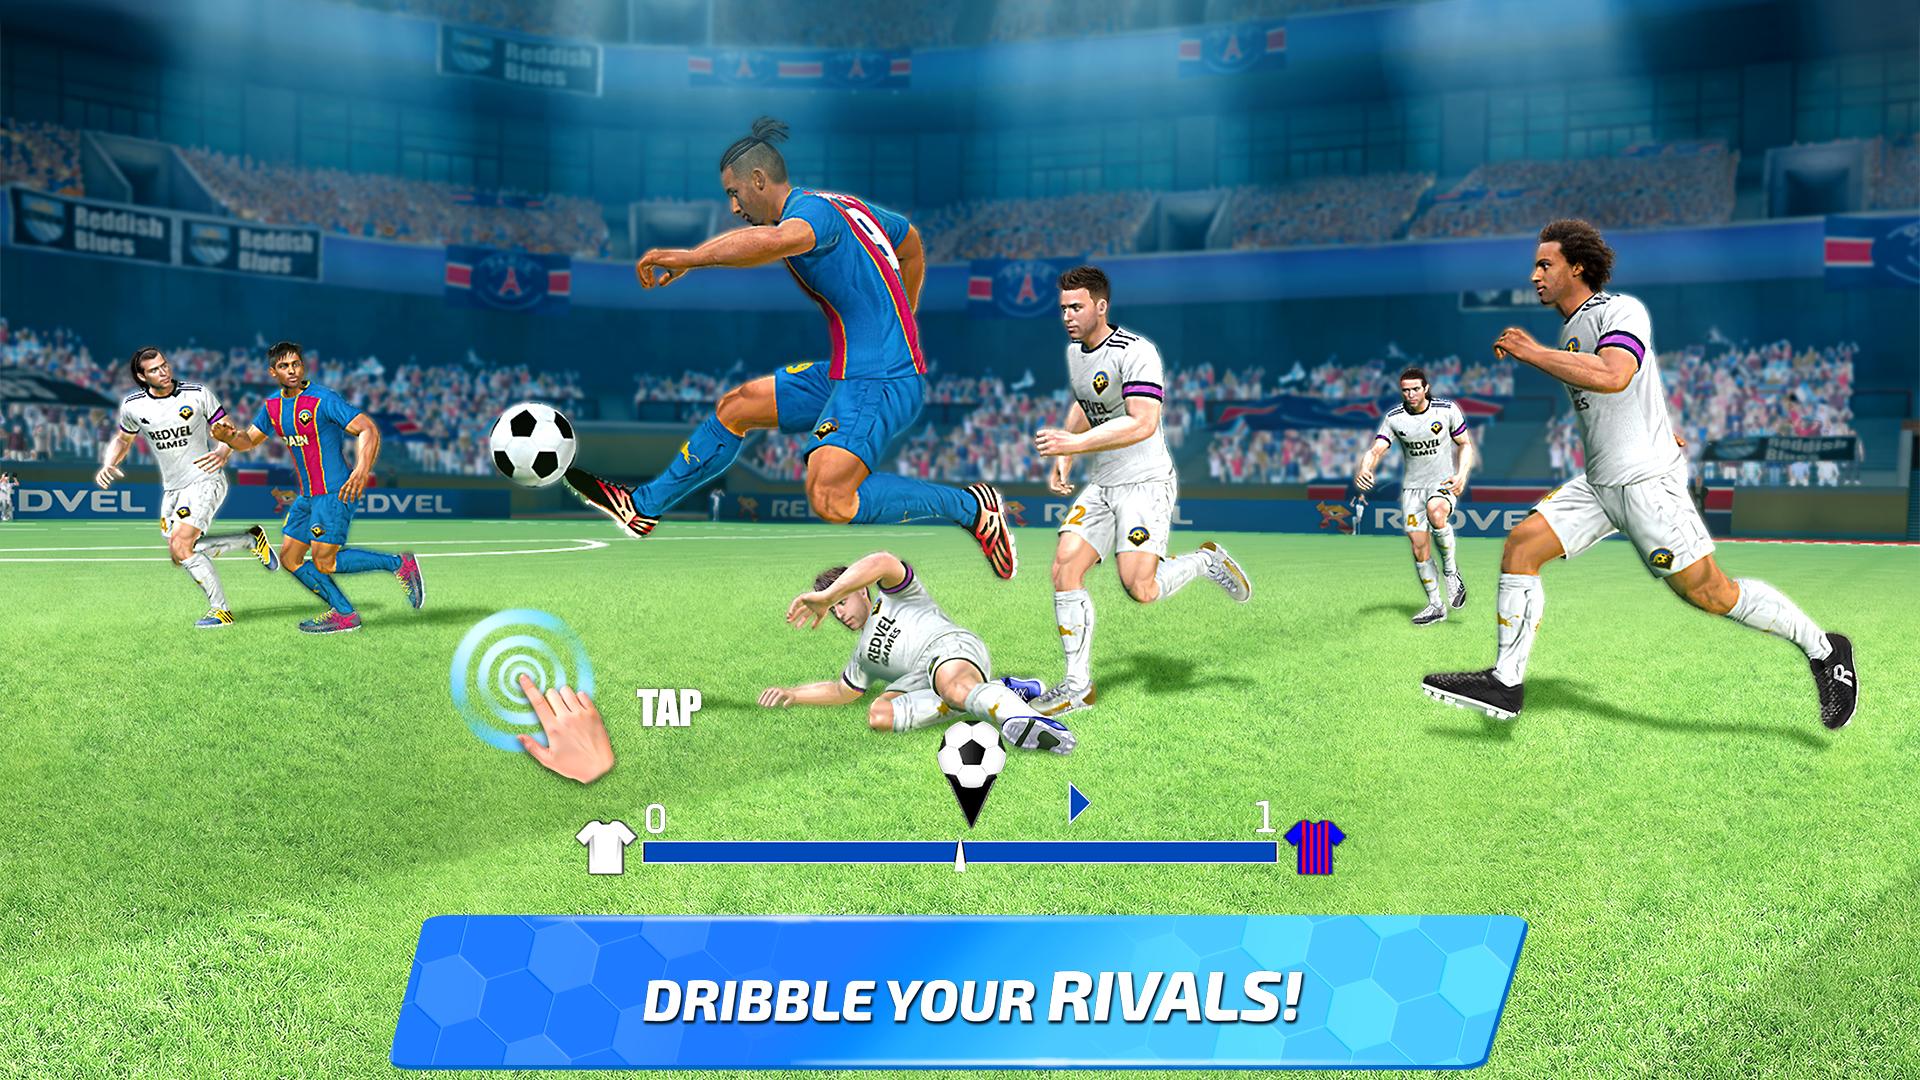 Soccer Star 2020 Football Cards: The soccer game 0.19.0 Screenshot 8